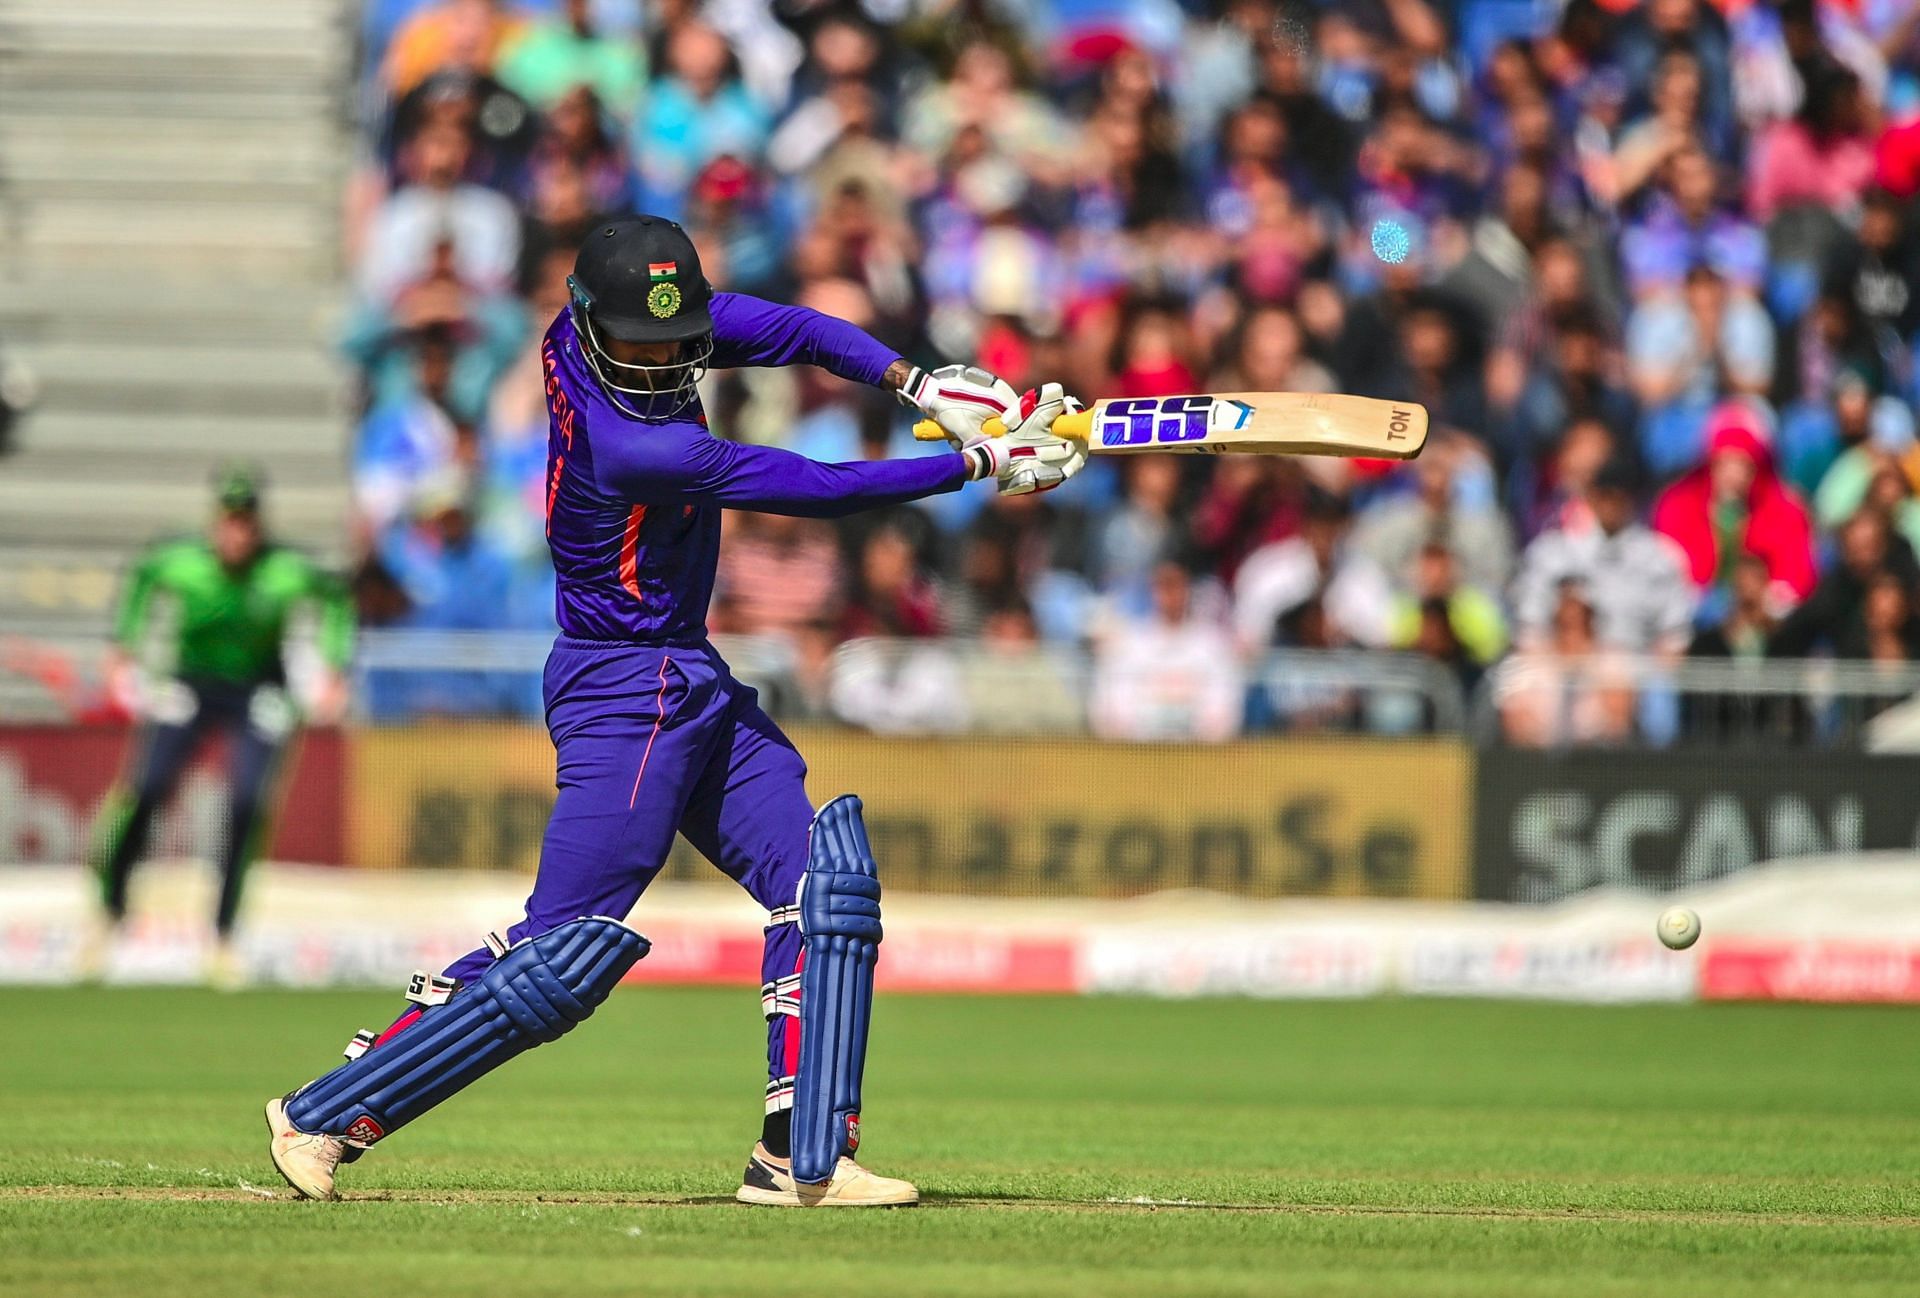 Deepak Hooda scored his maiden century in international cricket [P/C: BCCI]